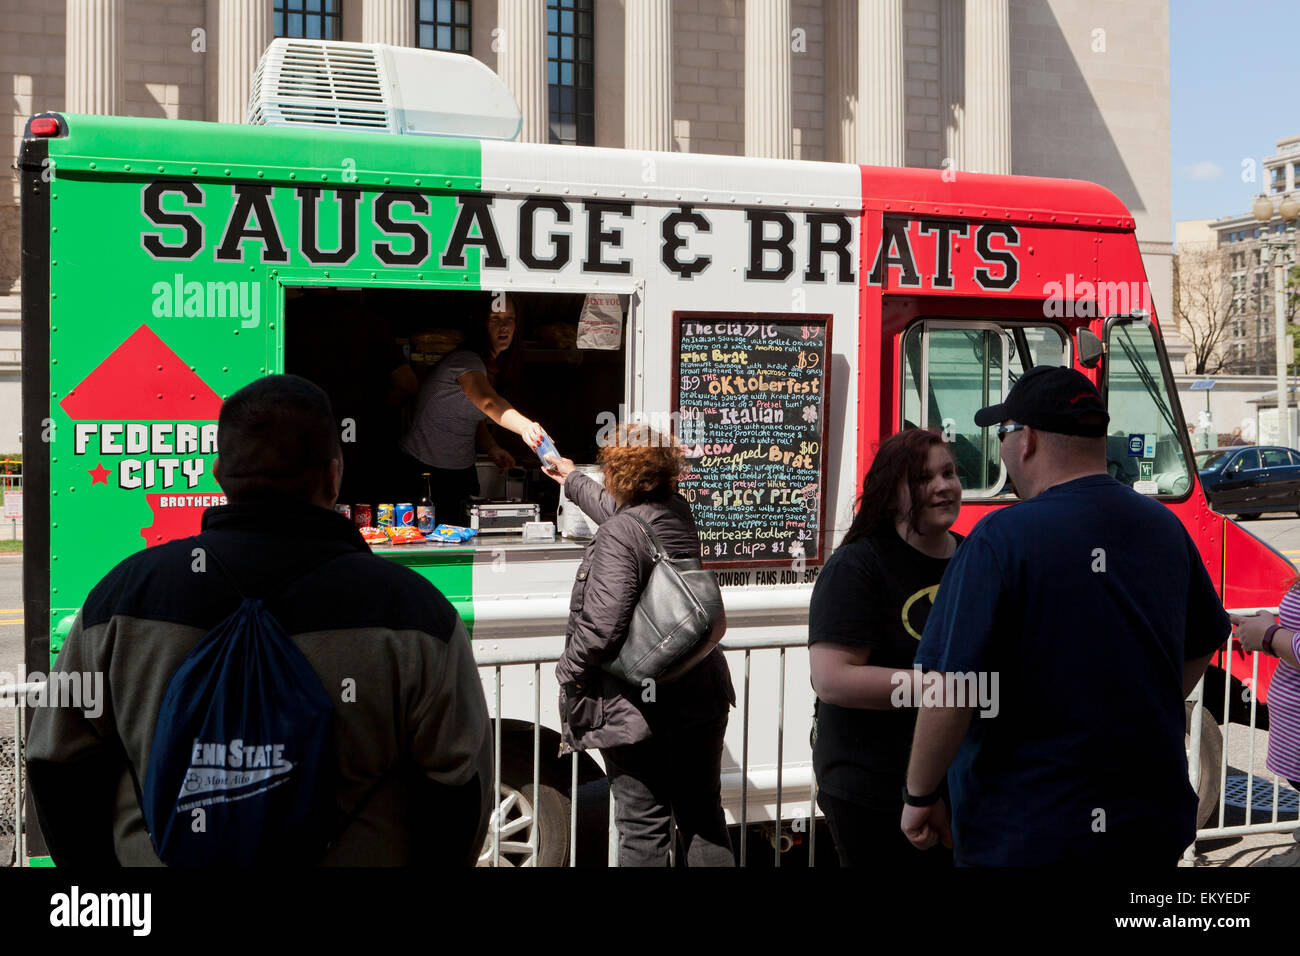 Sausage & Brats food truck - USA Stock Photo